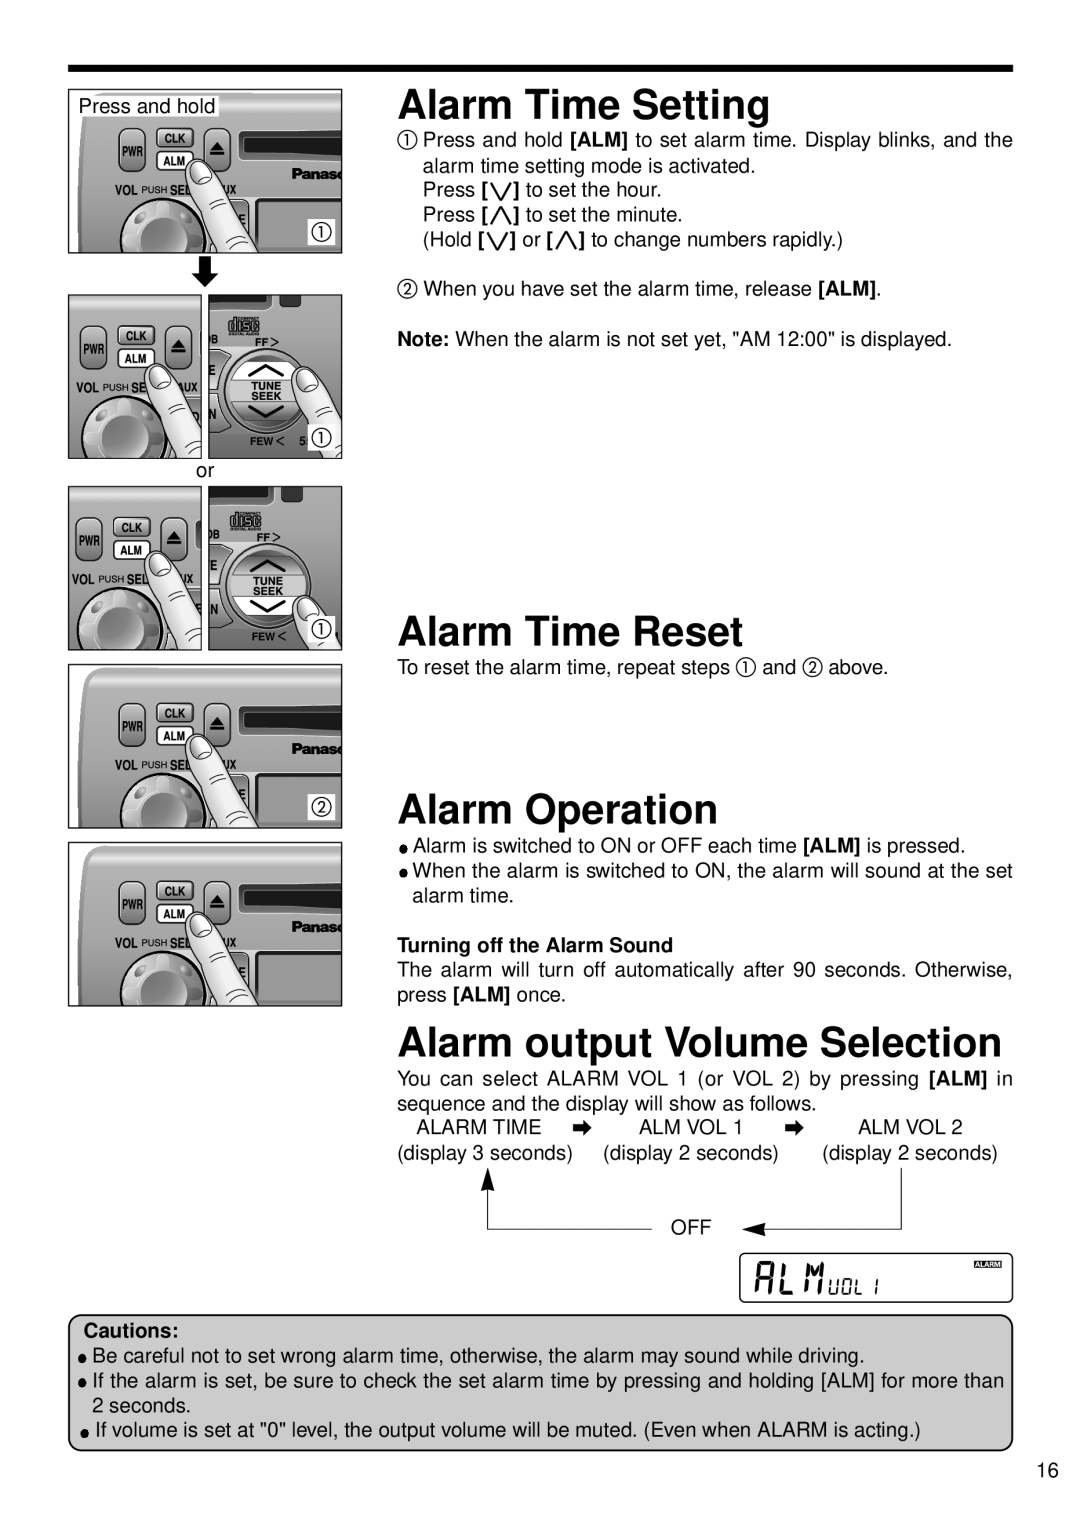 Panasonic 5300U, CQ-5500U Alarm Time Setting, Alarm Time Reset, Alarm Operation, Alarm output Volume Selection, Cautions 